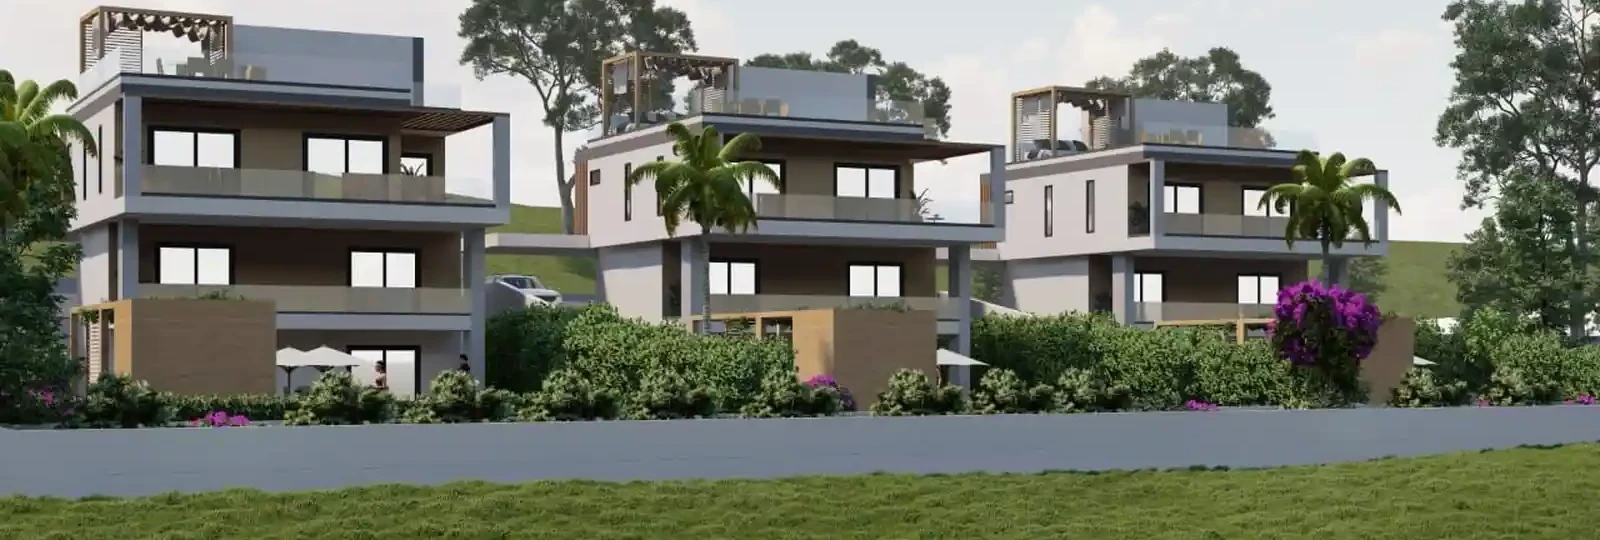 5-bedroom villa fоr sаle €1.900.000, image 1